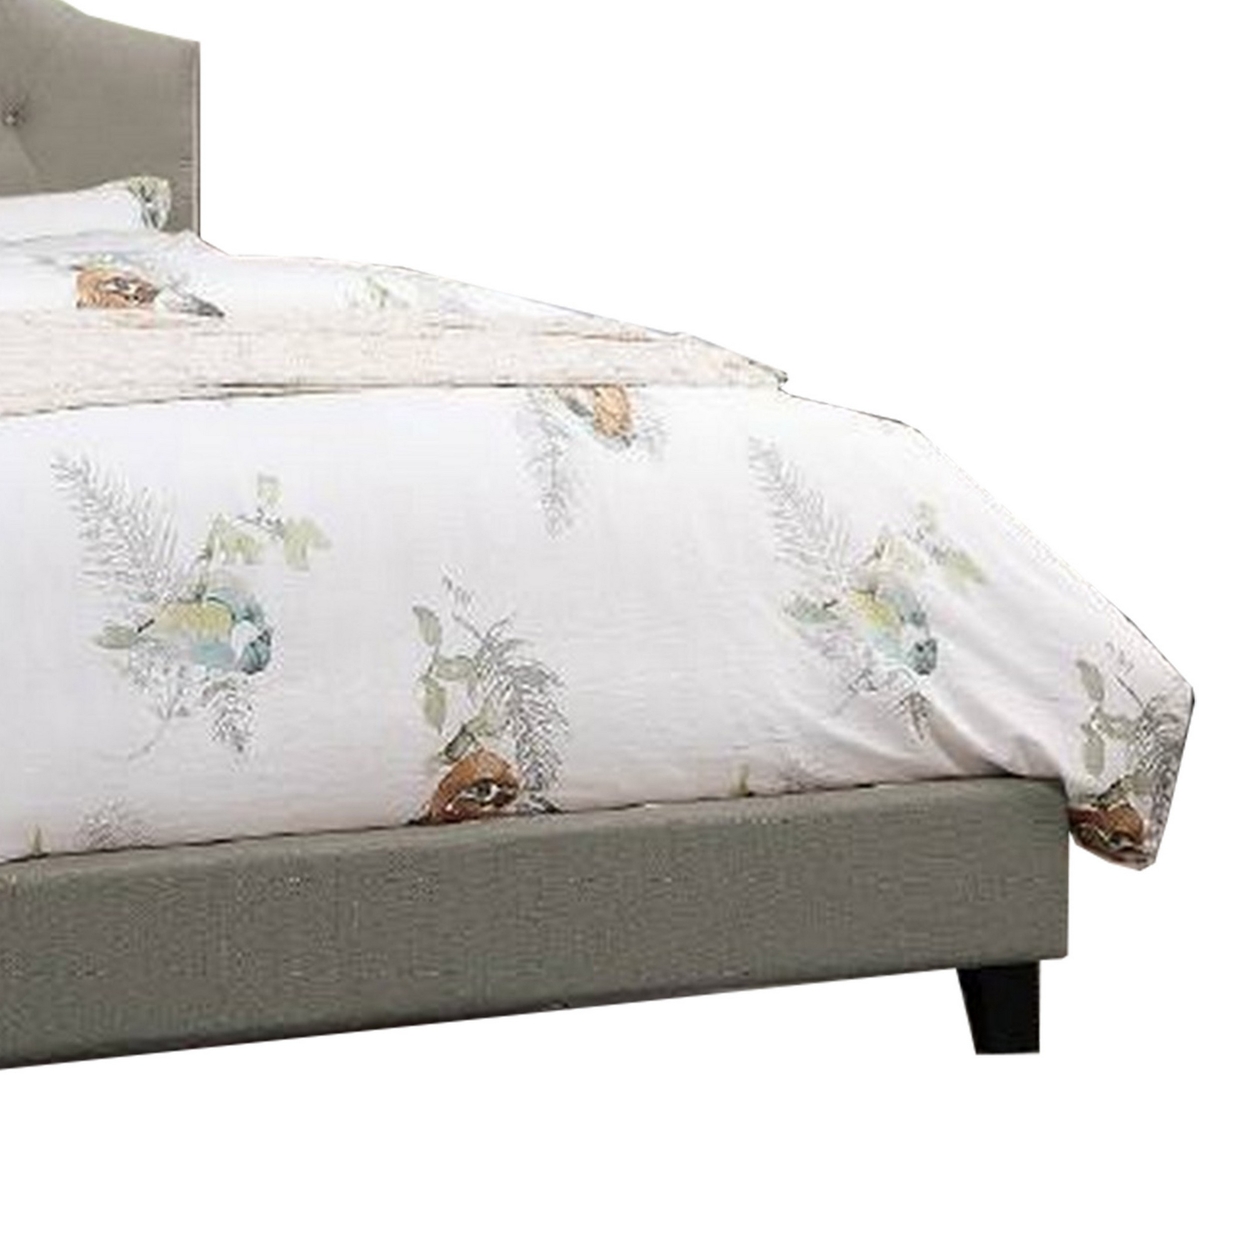 Eni Upholstered California King Size Bed, Tufted Adjustable Headboard, Gray- Saltoro Sherpi